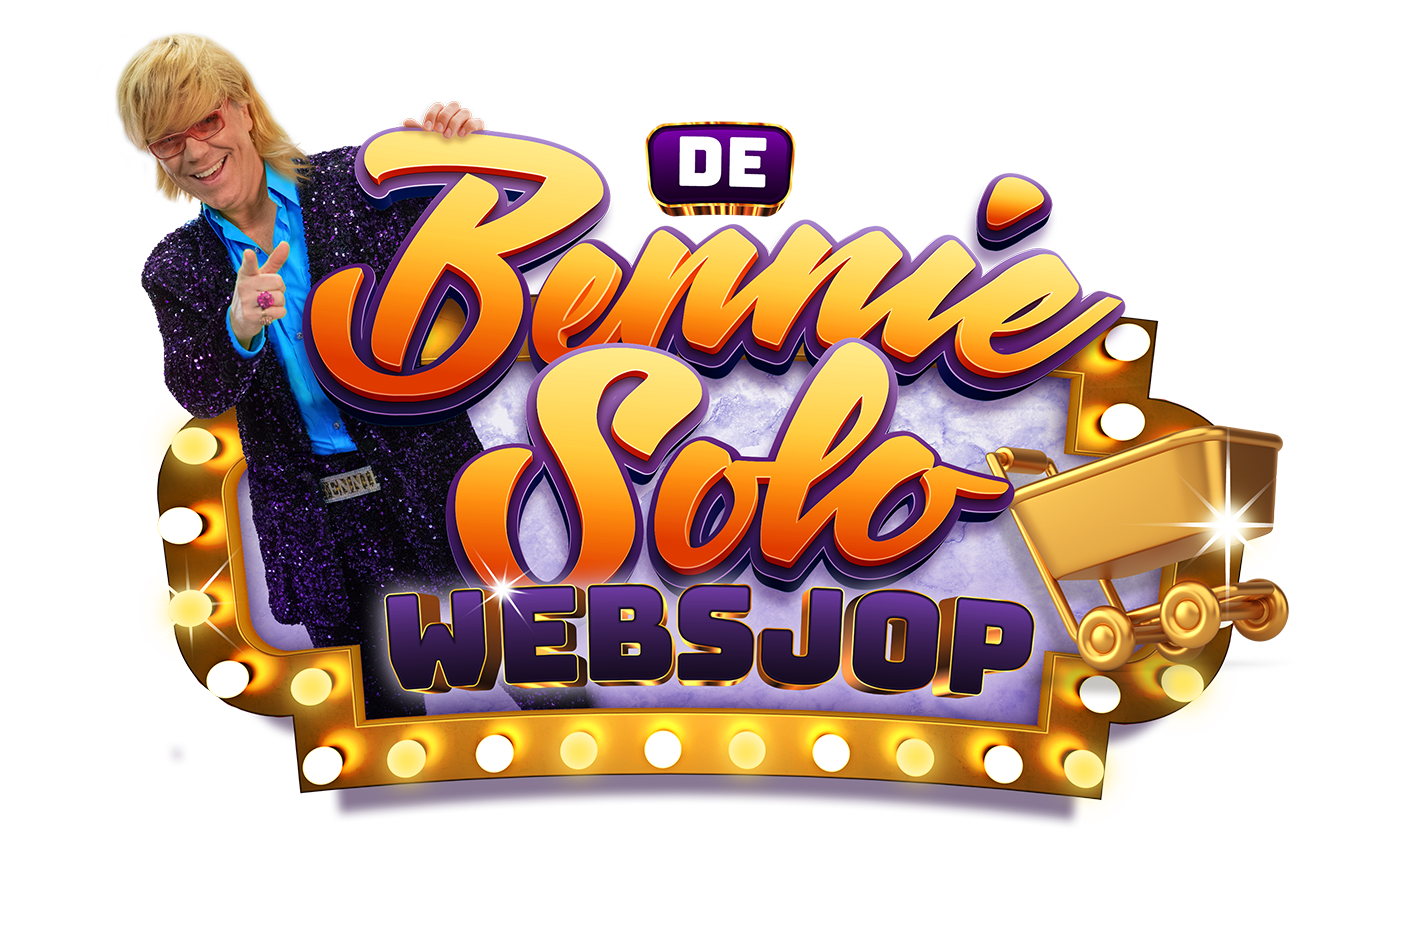 Bennie Solo Webshop